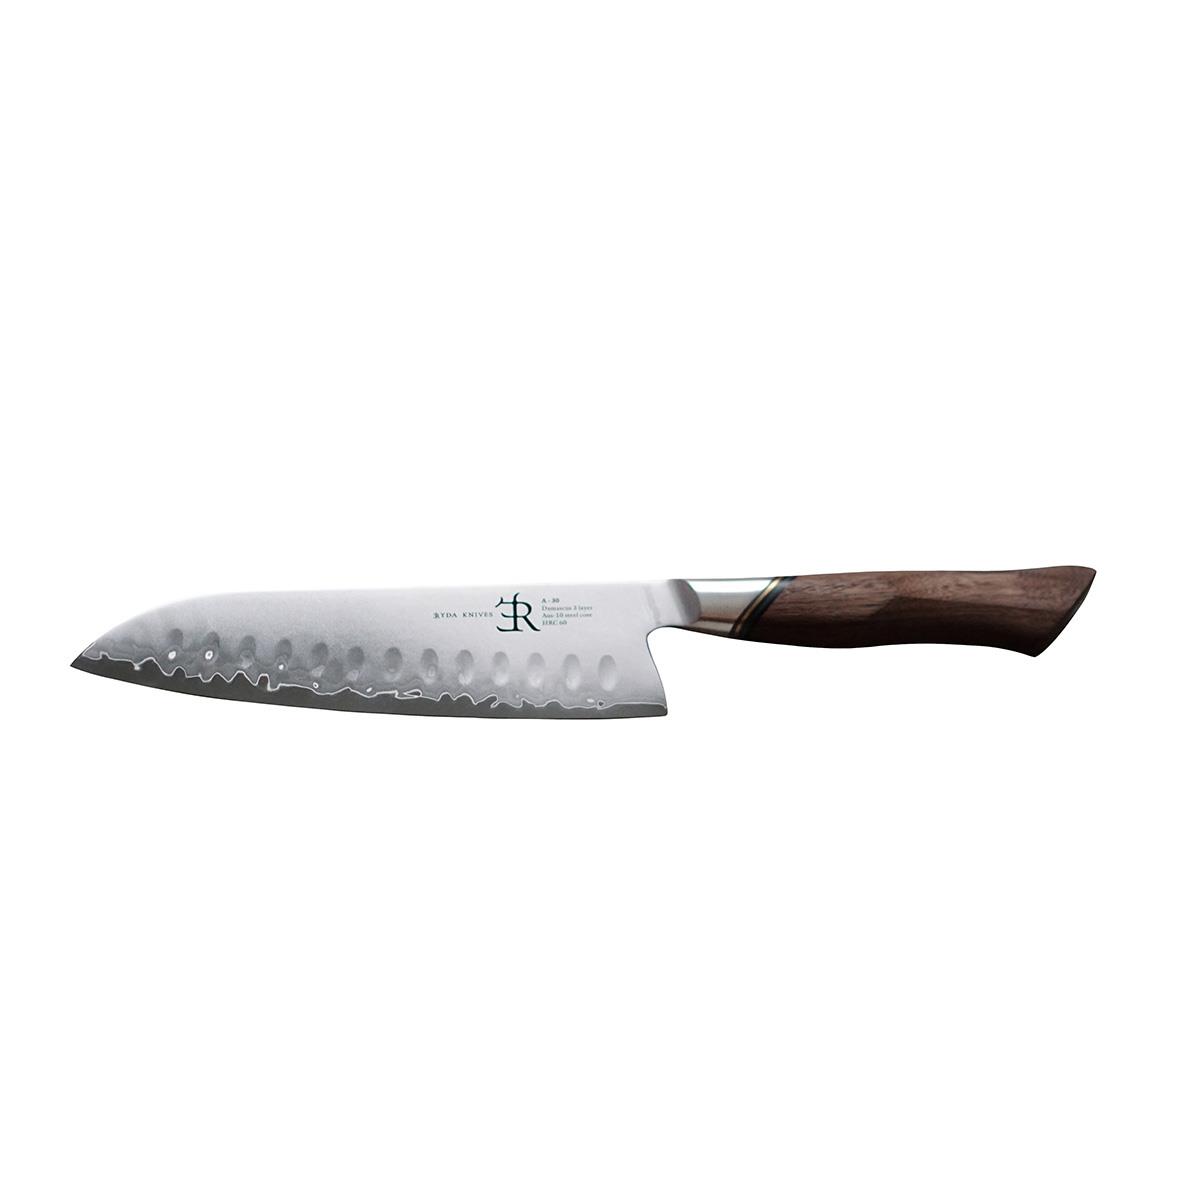 Santokukniv Ryda Knives A-30 18cm